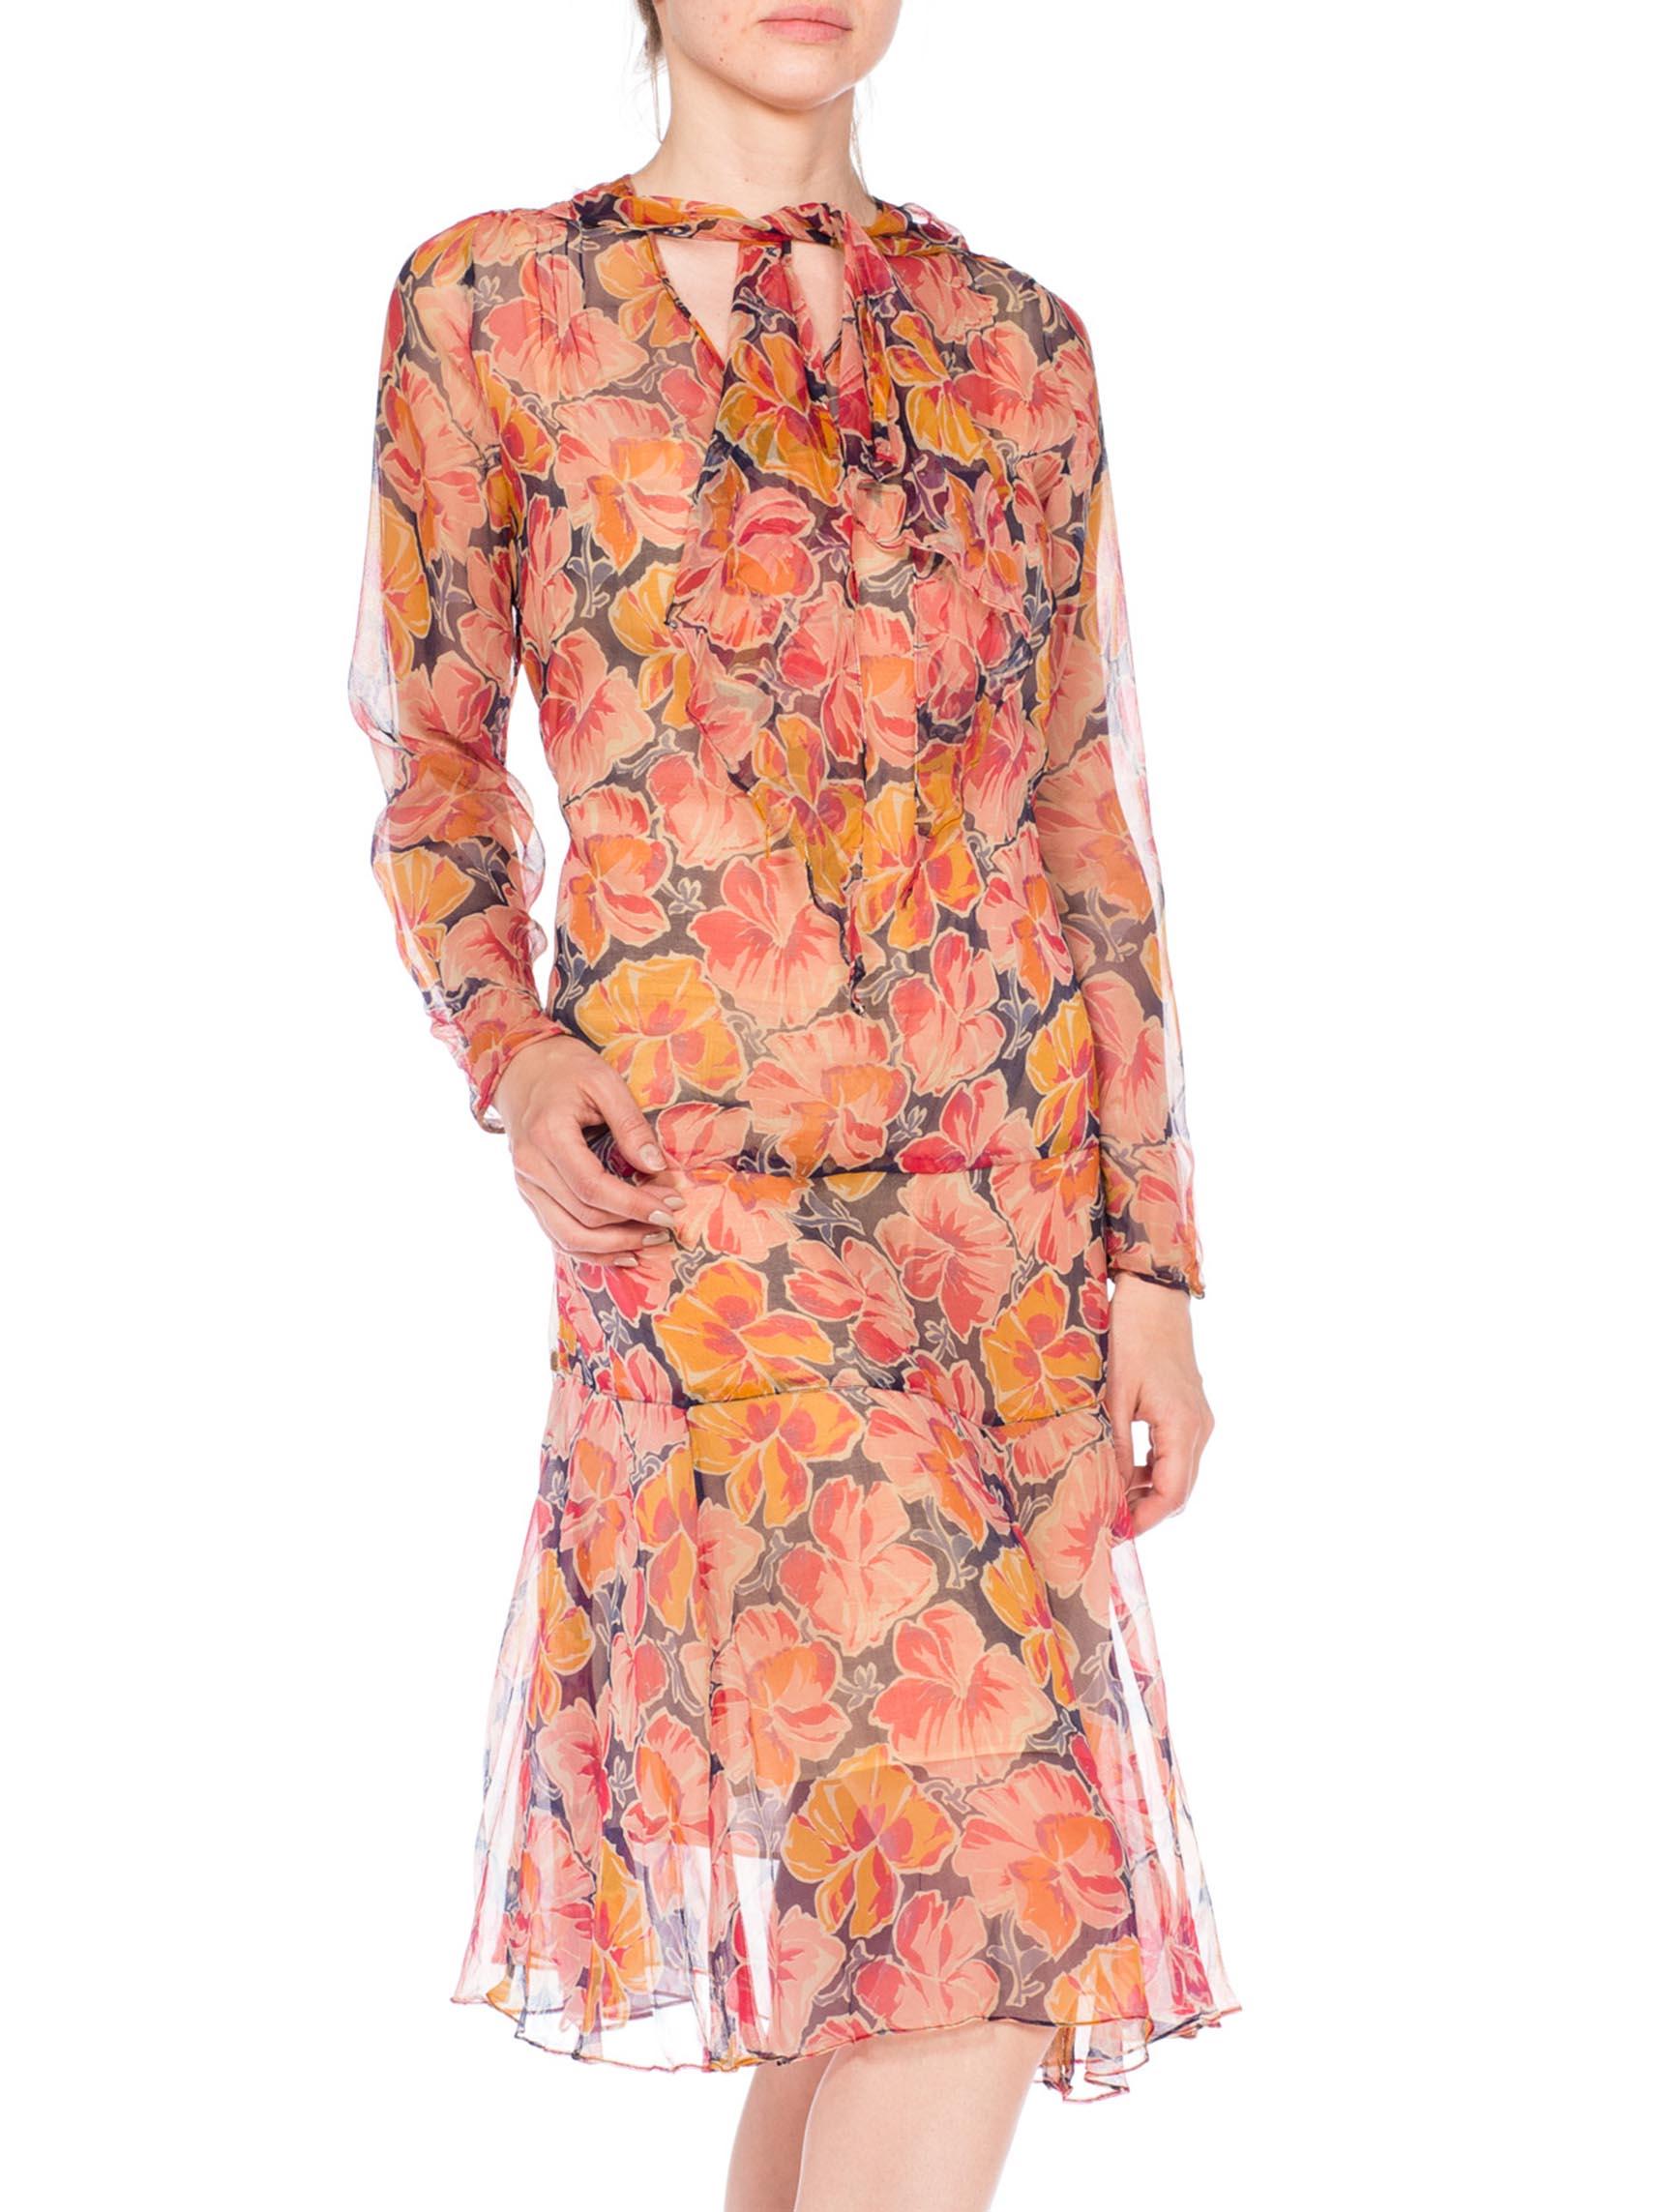 silk chiffon dress with sleeves